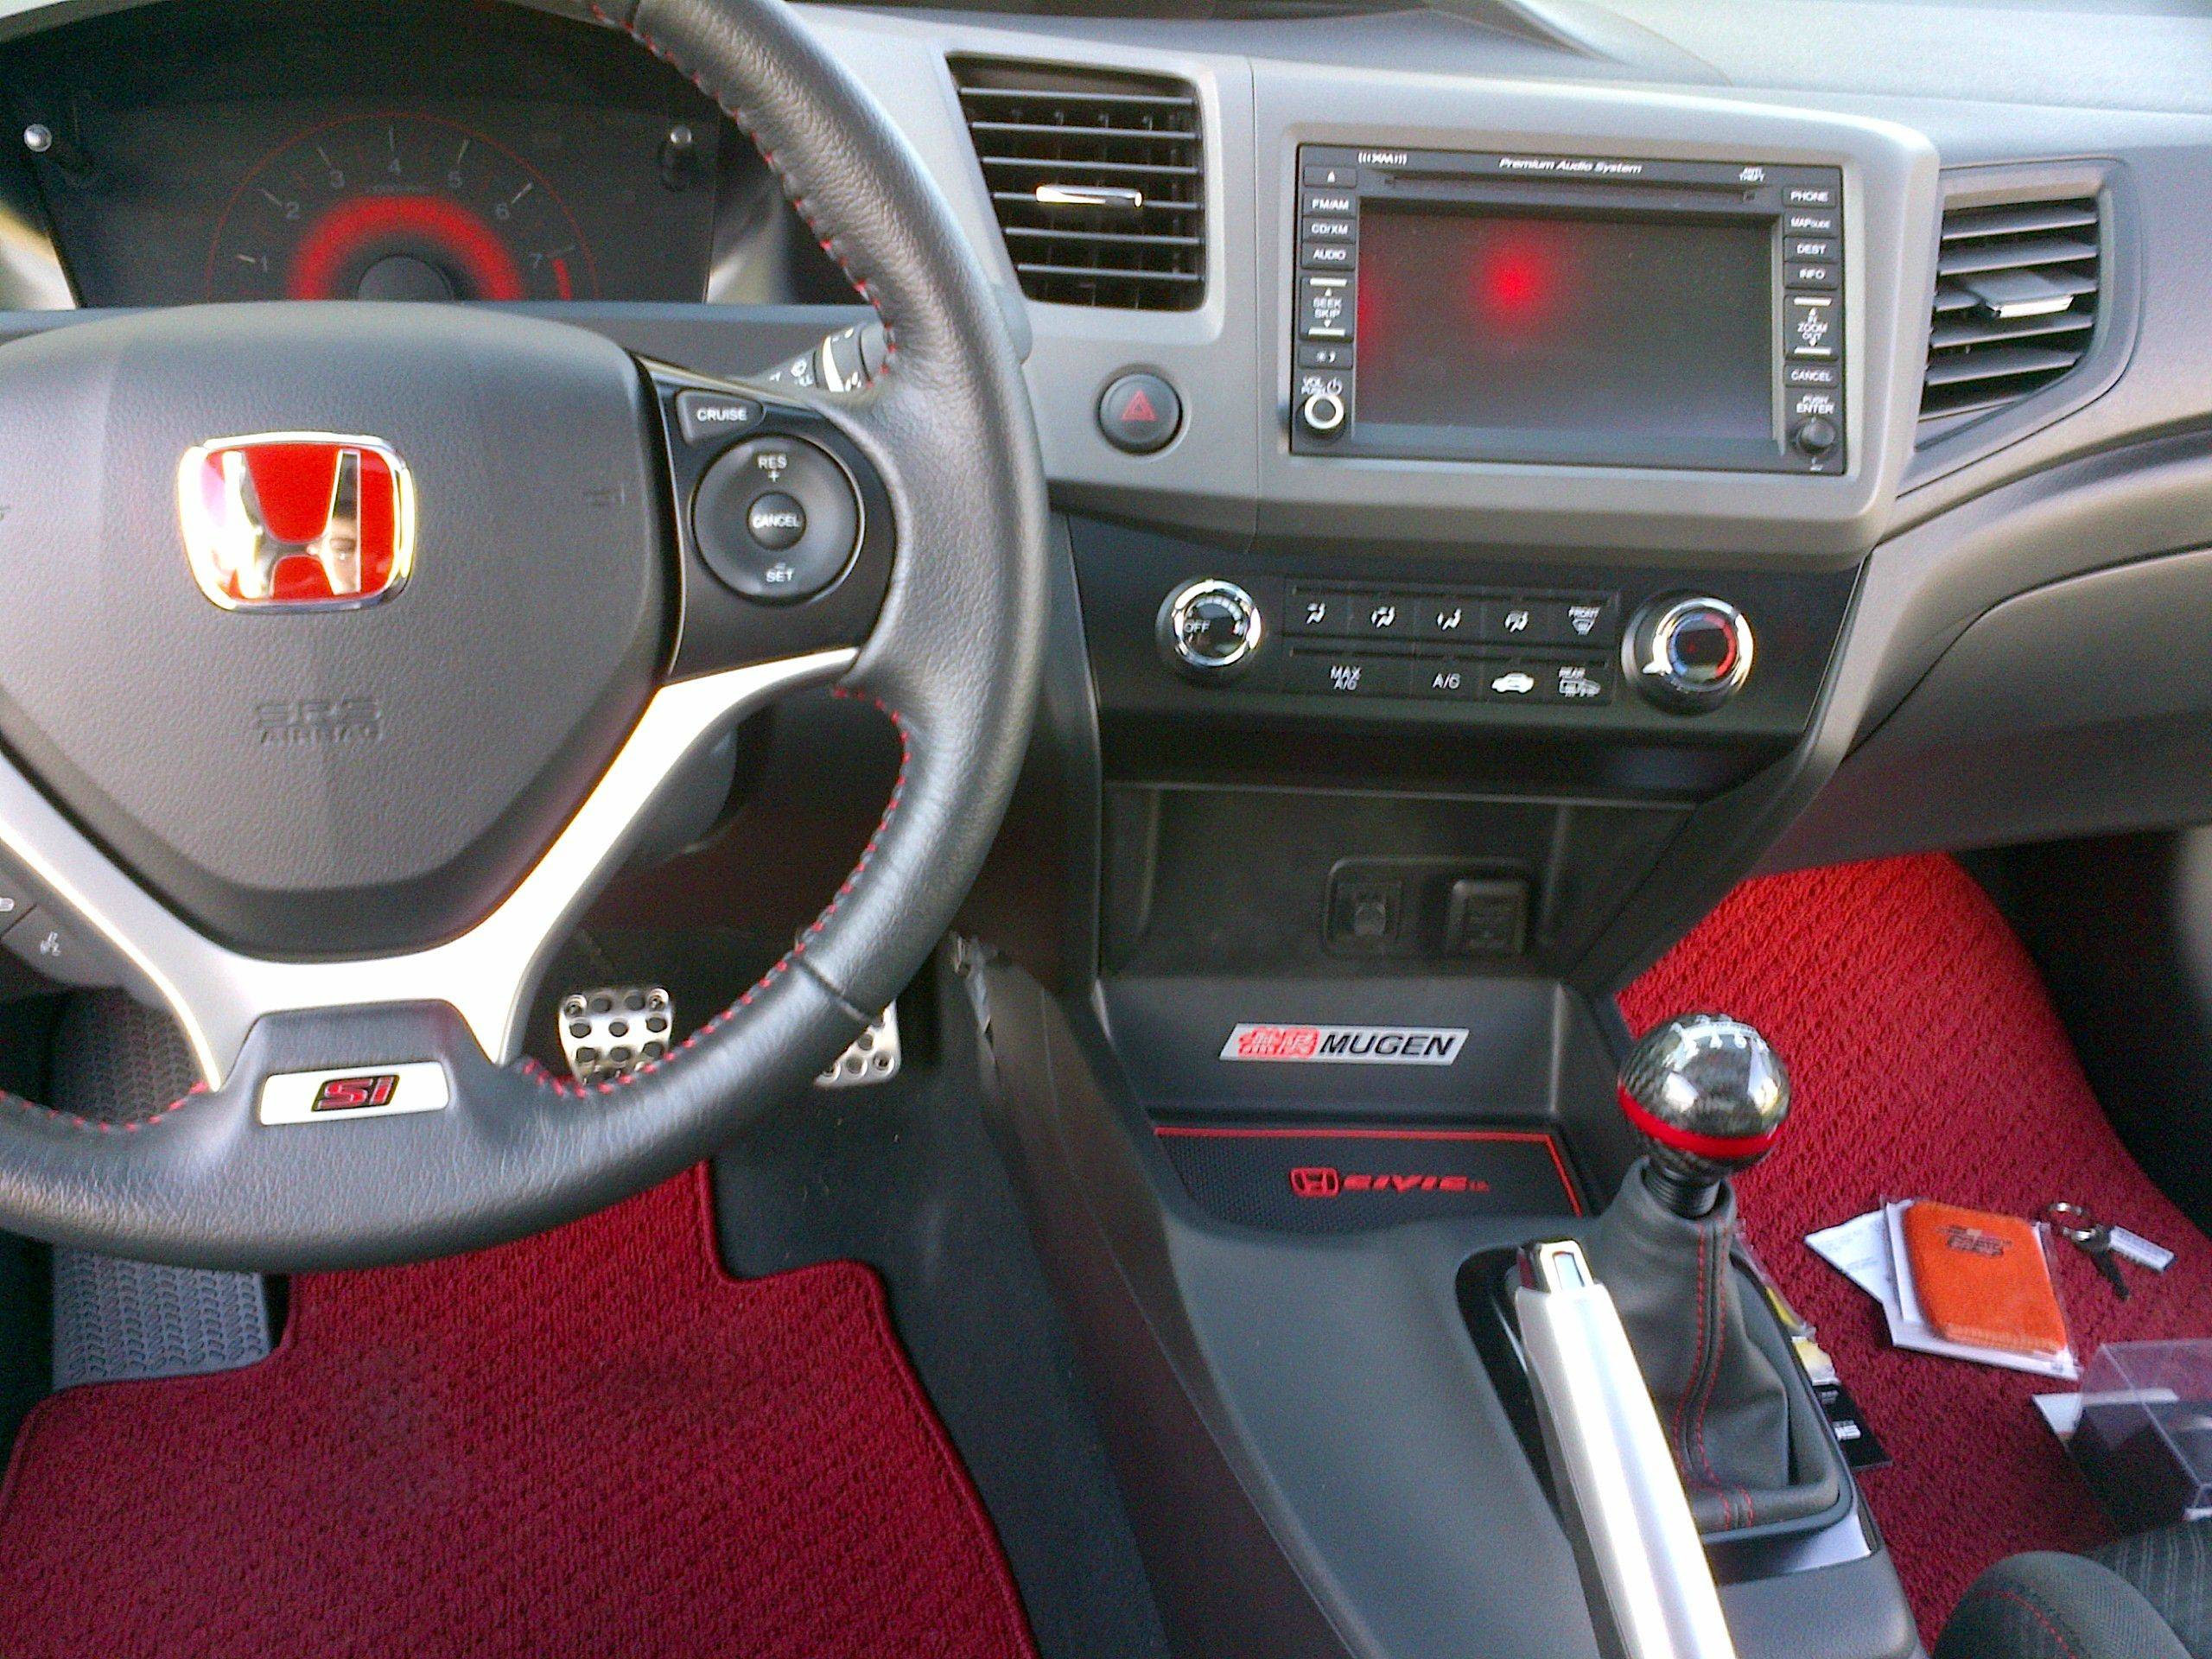 Honda Civic Honda Civic 9th Generation Interior